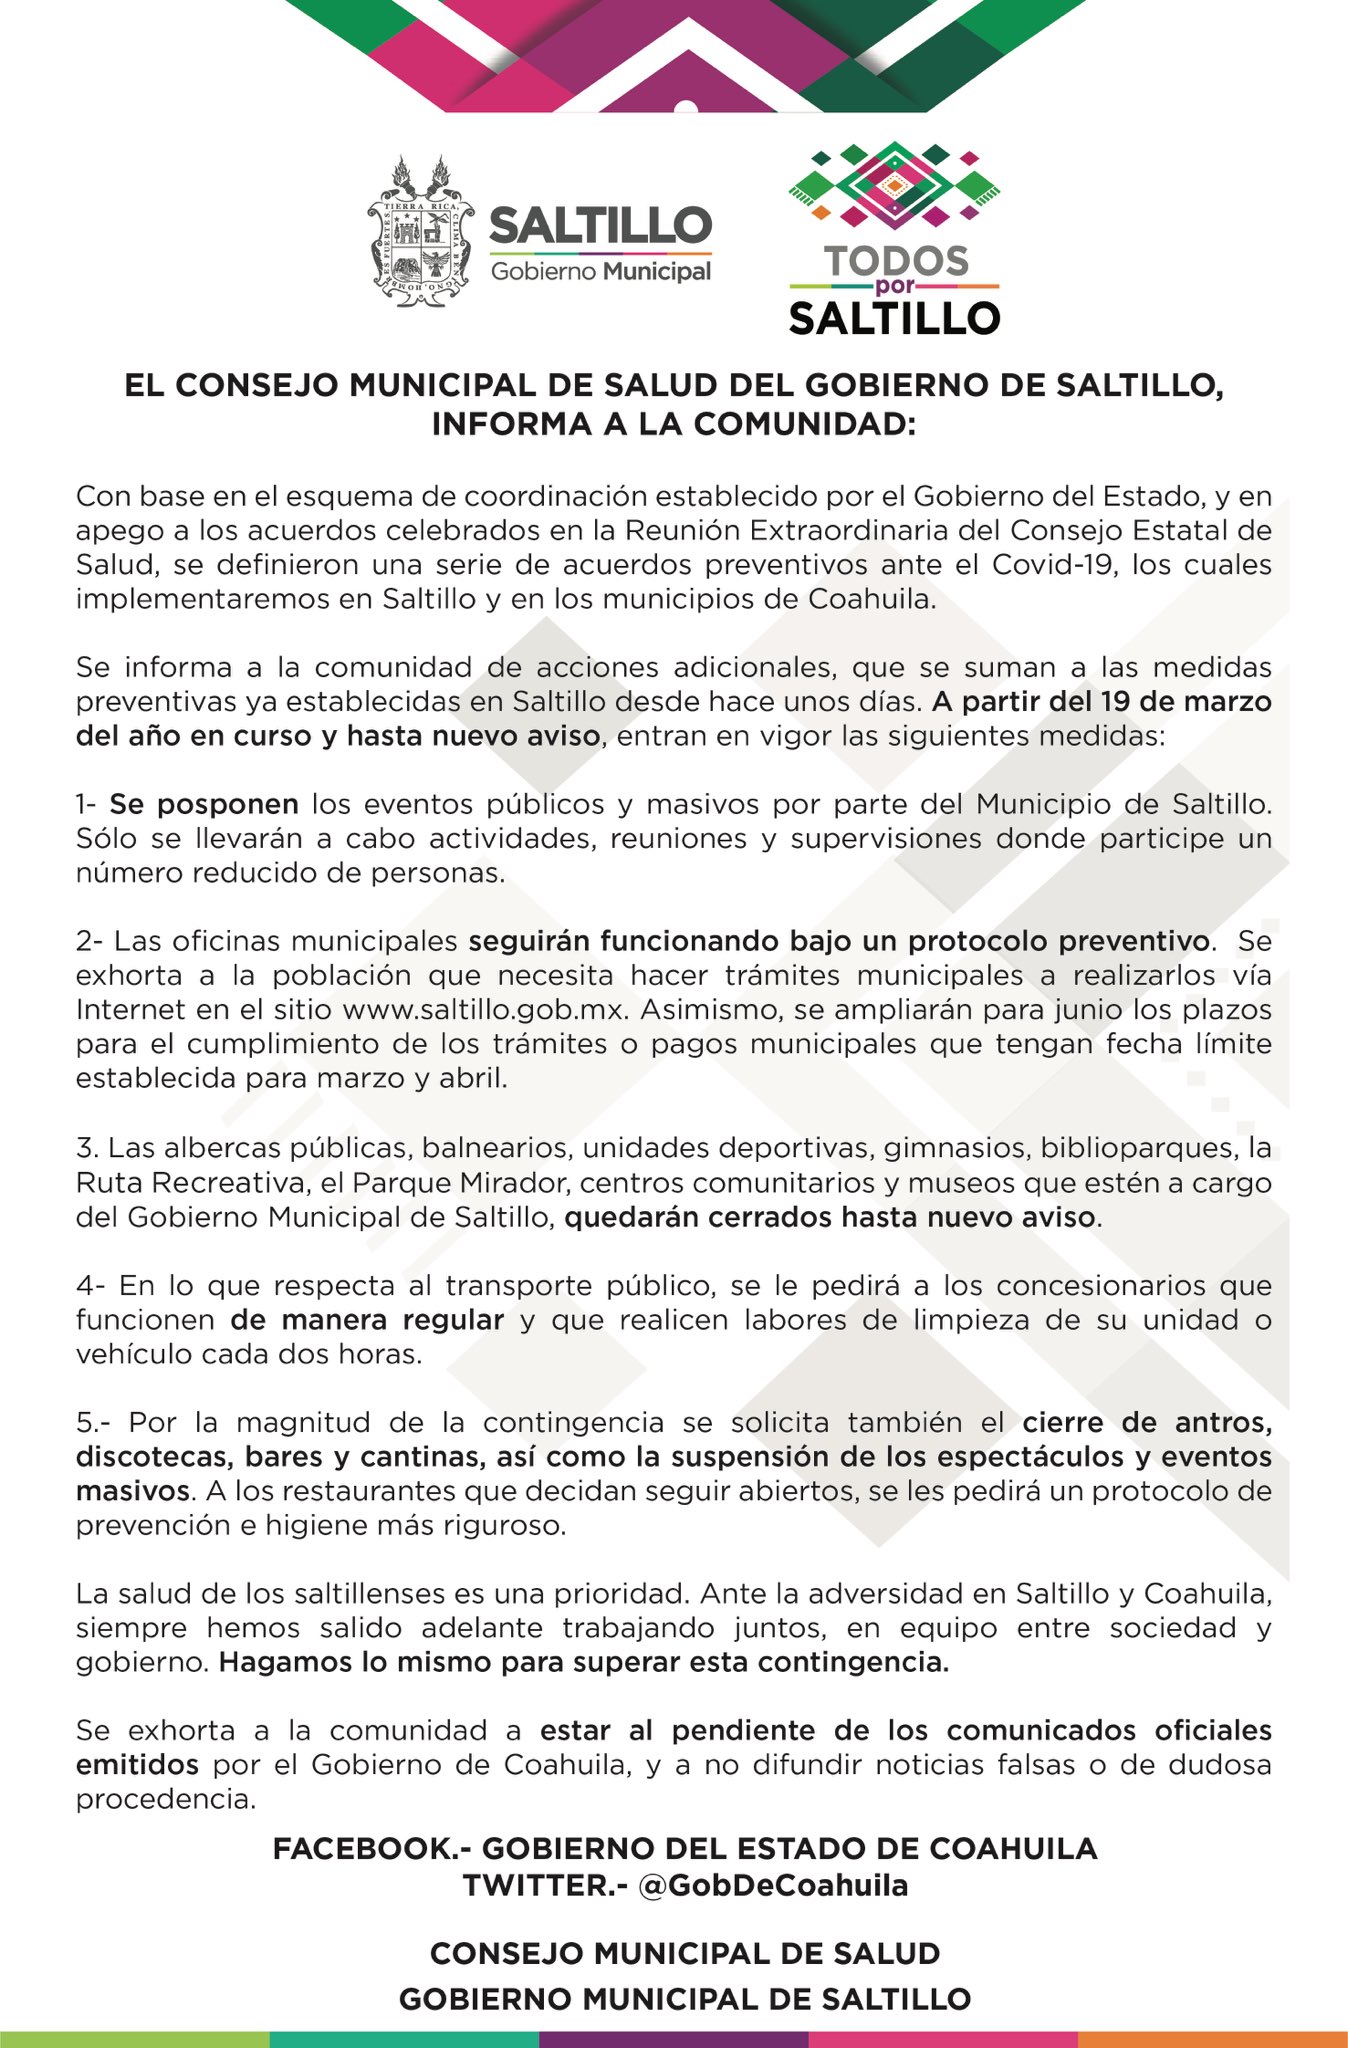 Gobierno Municipal de Saltillo on Twitter: 